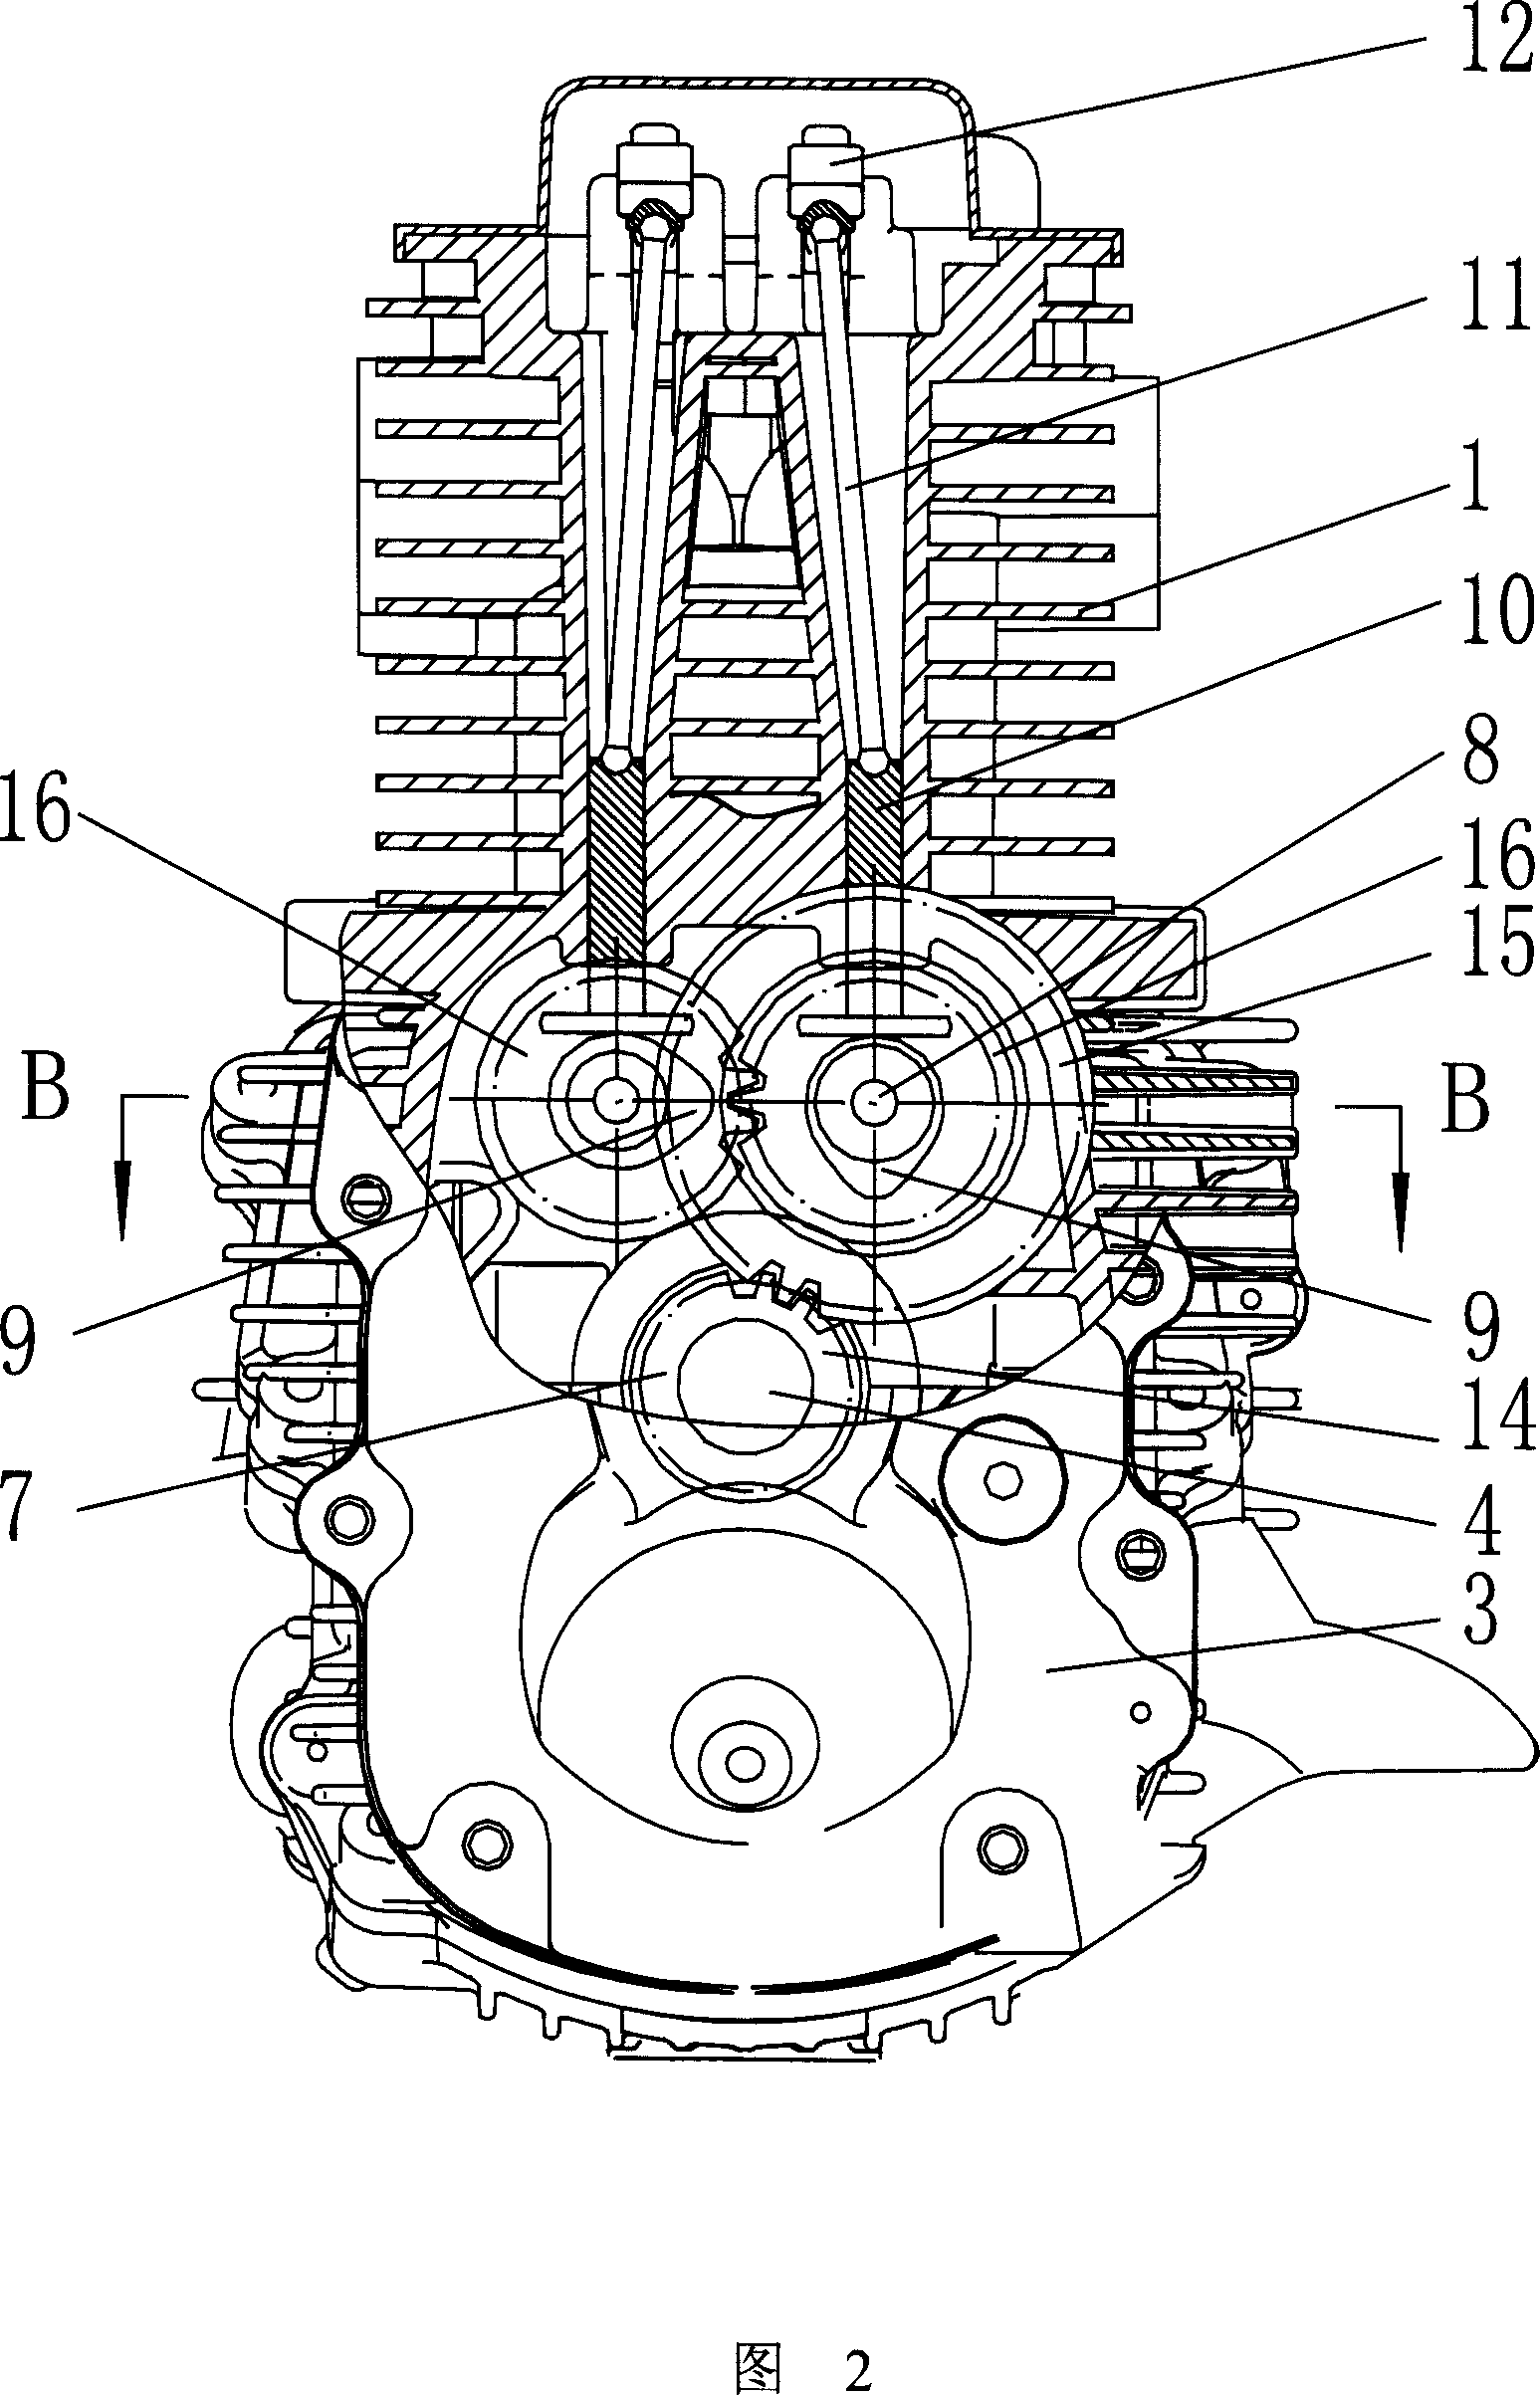 Engine for portable generator